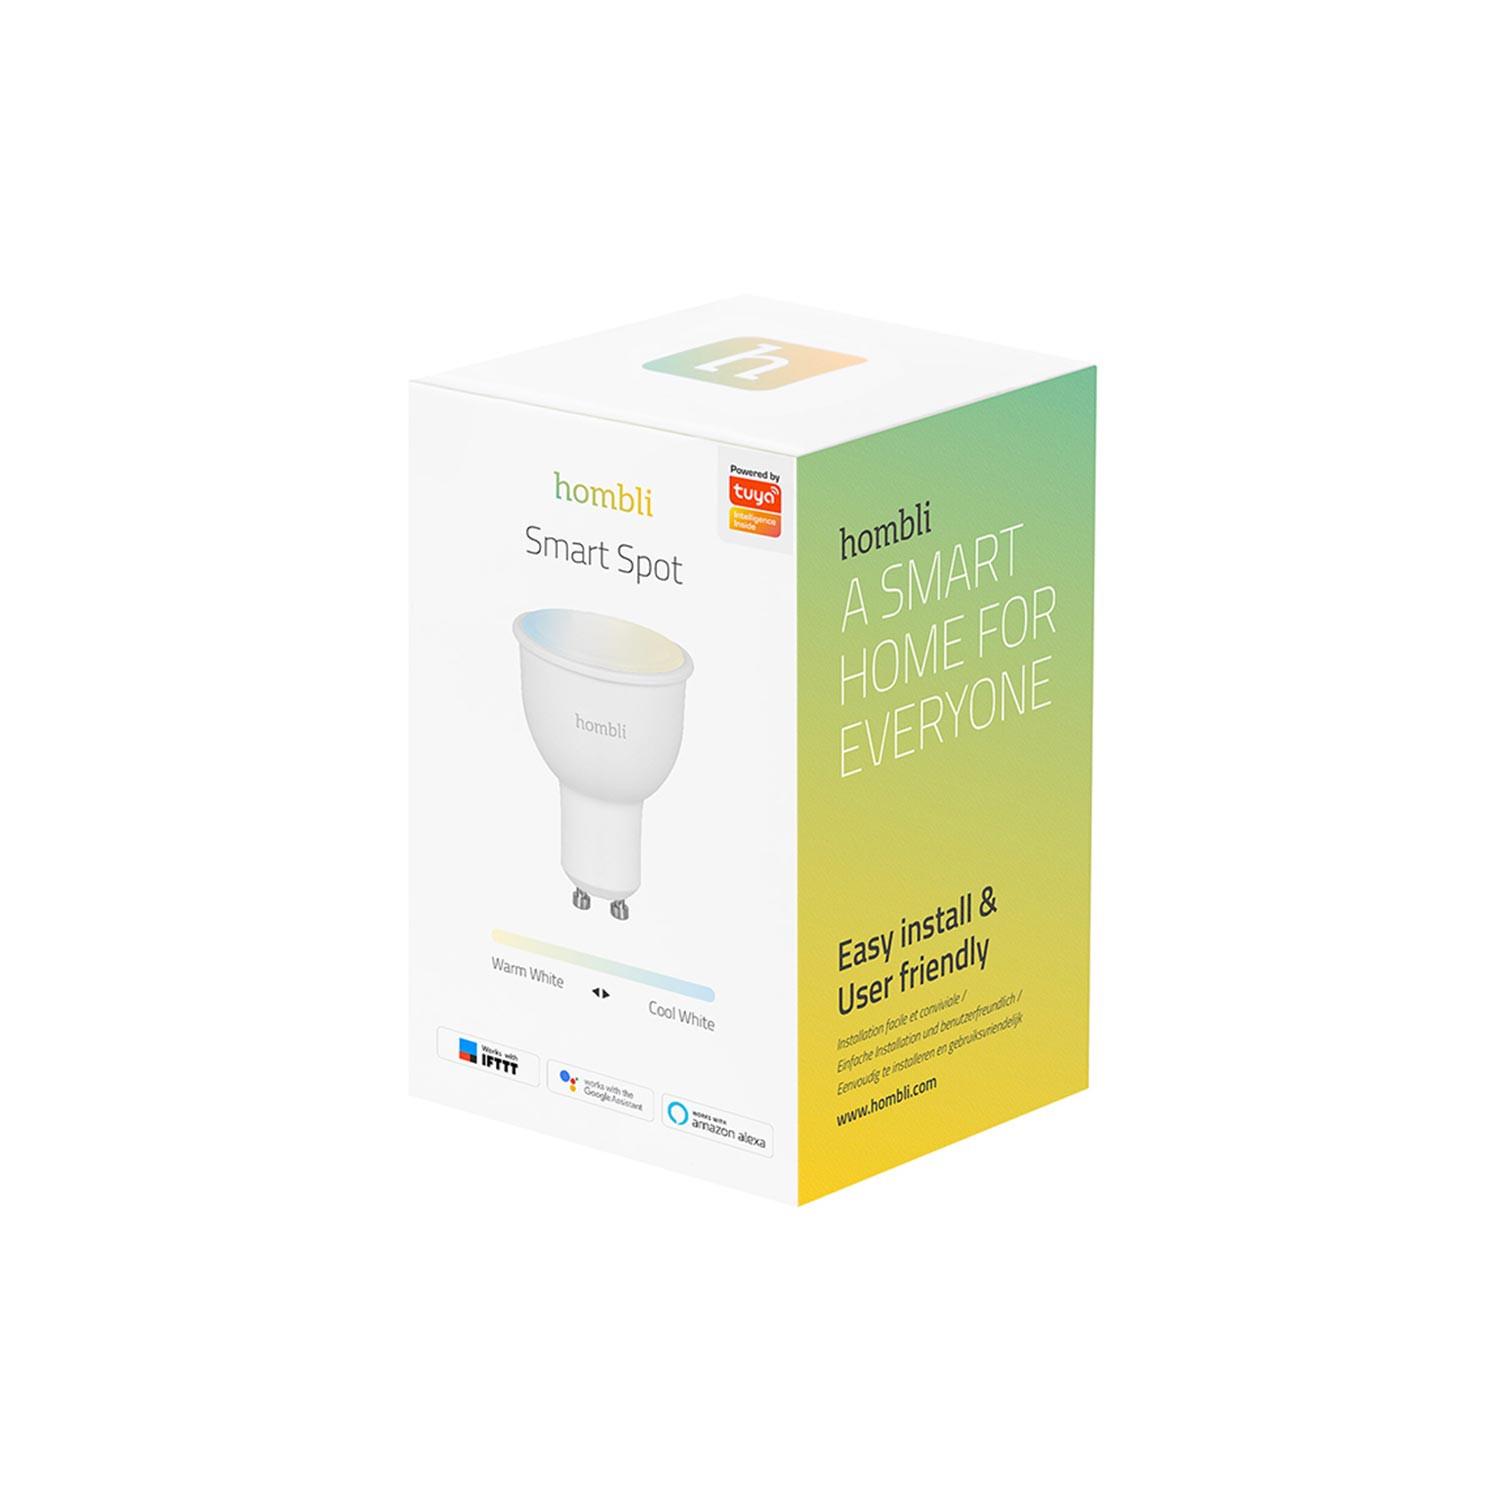 Hombli Smart Spot GU10 White-Lampe + gratis Smart Spot GU10 White - Verpackung